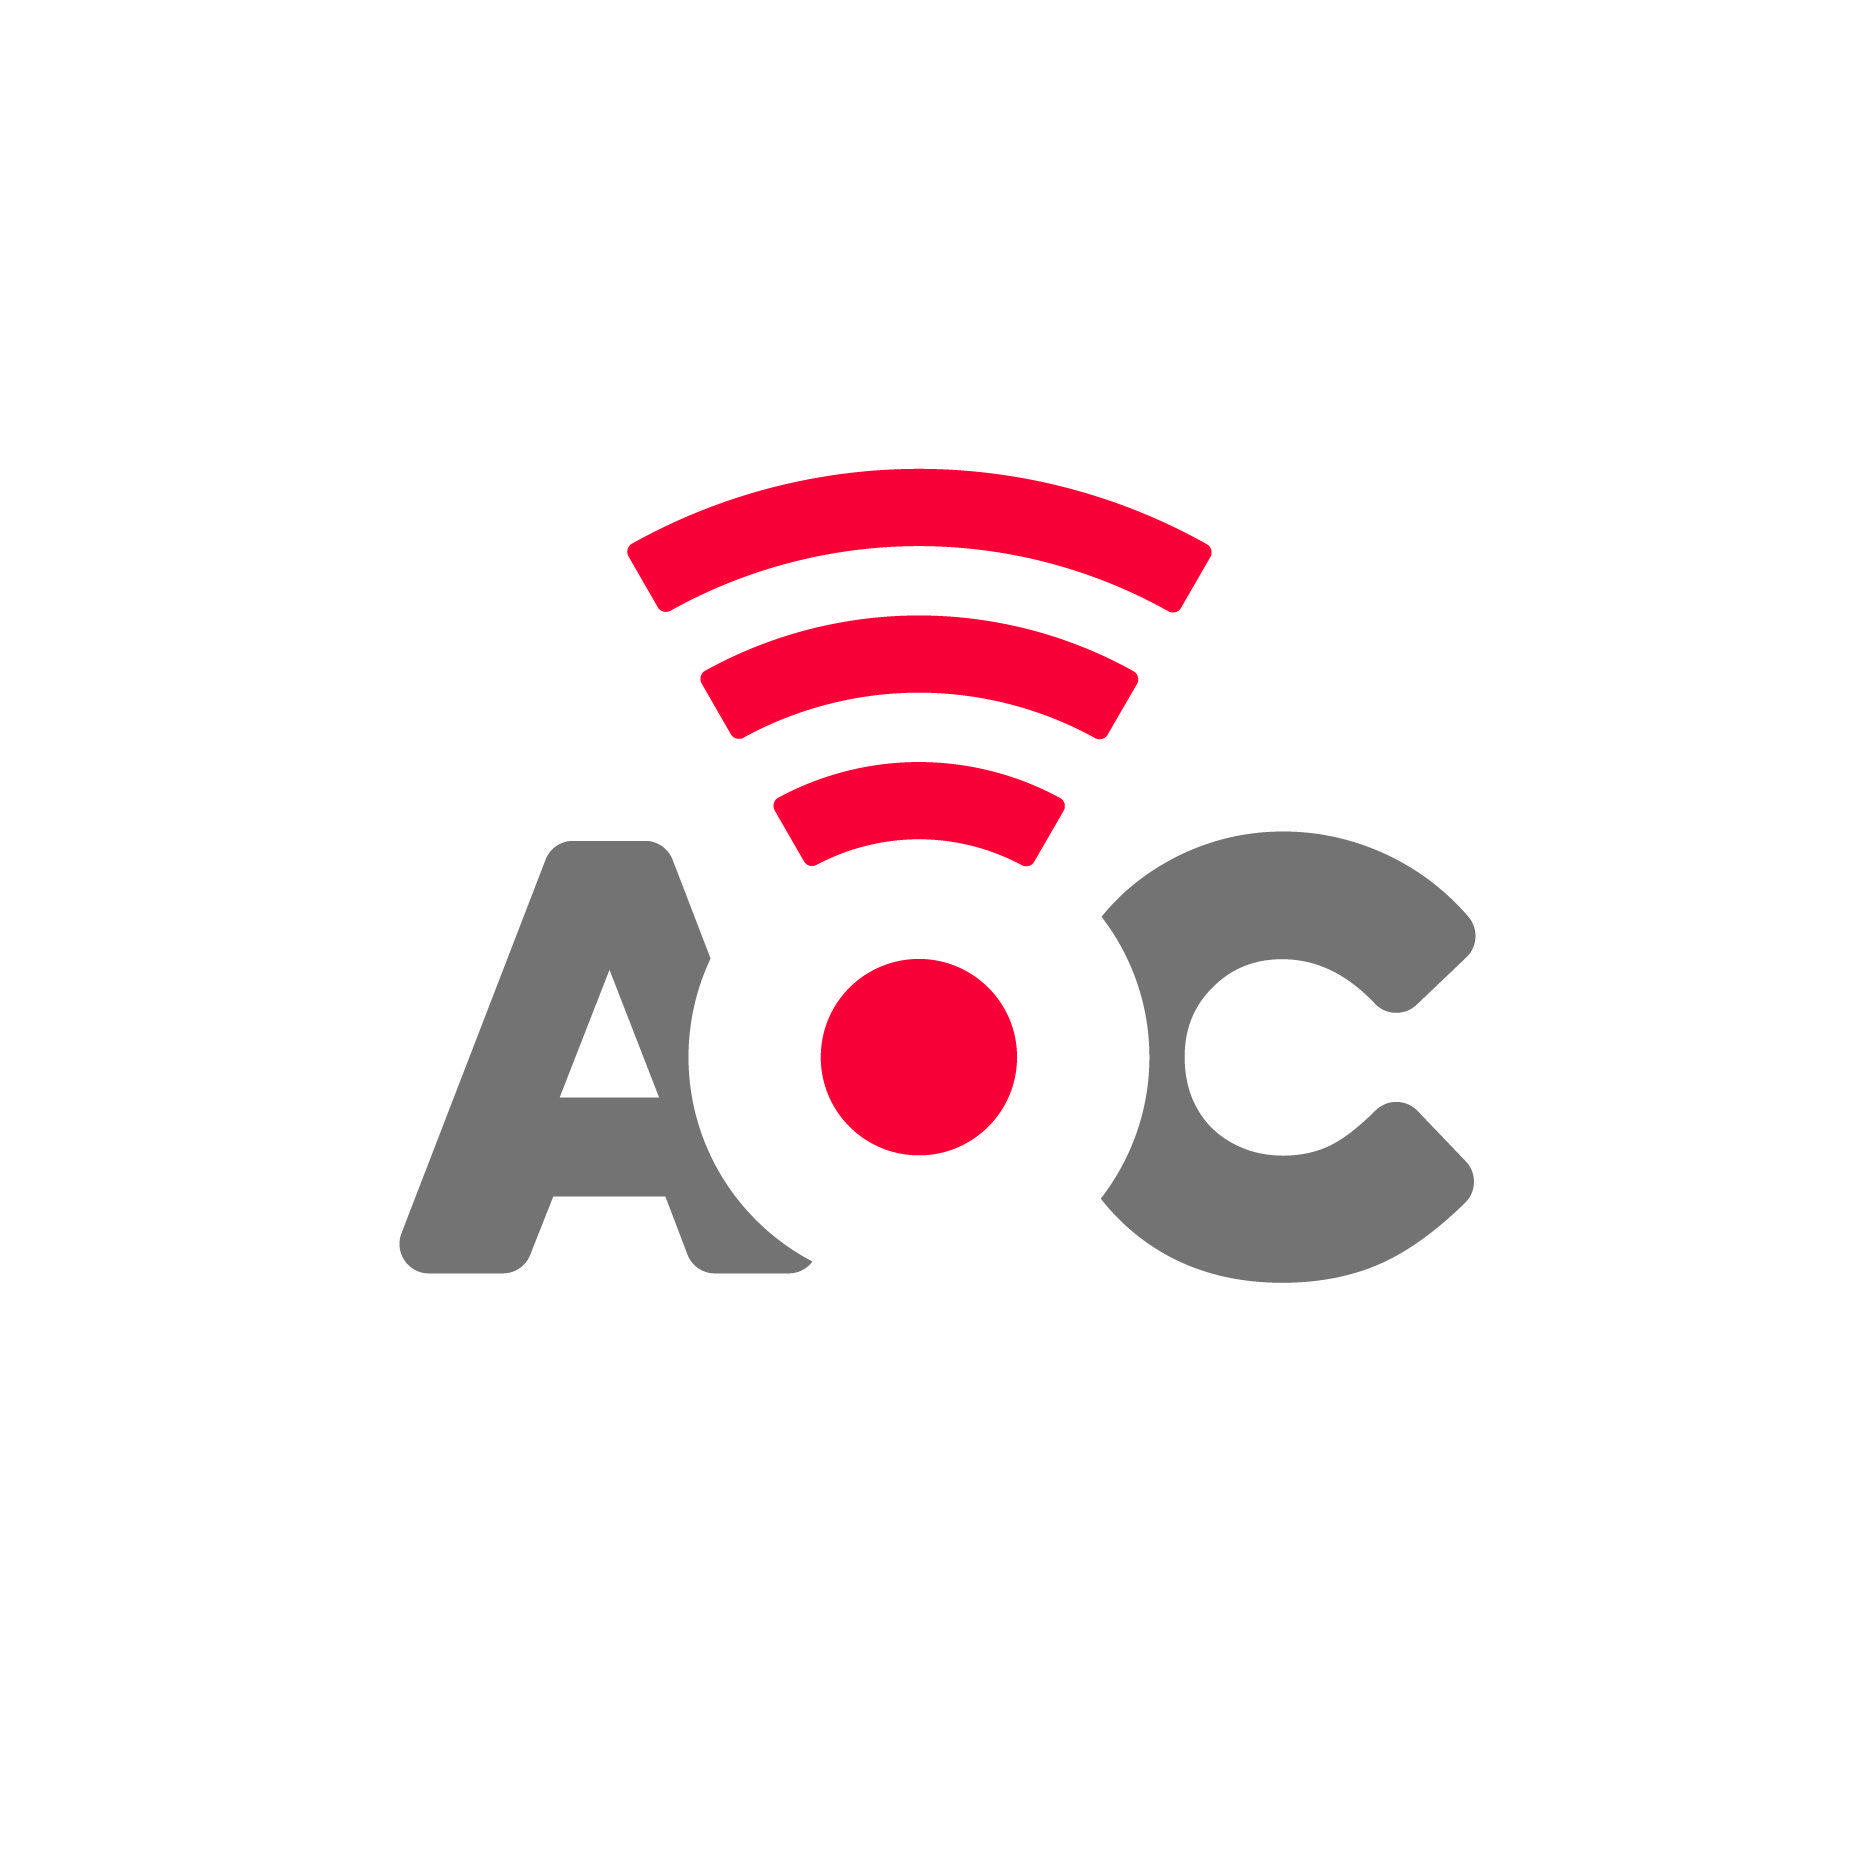 AOC Logo - AOC Logo - Right Angle rightangleadv.com | My Work | Pinterest ...